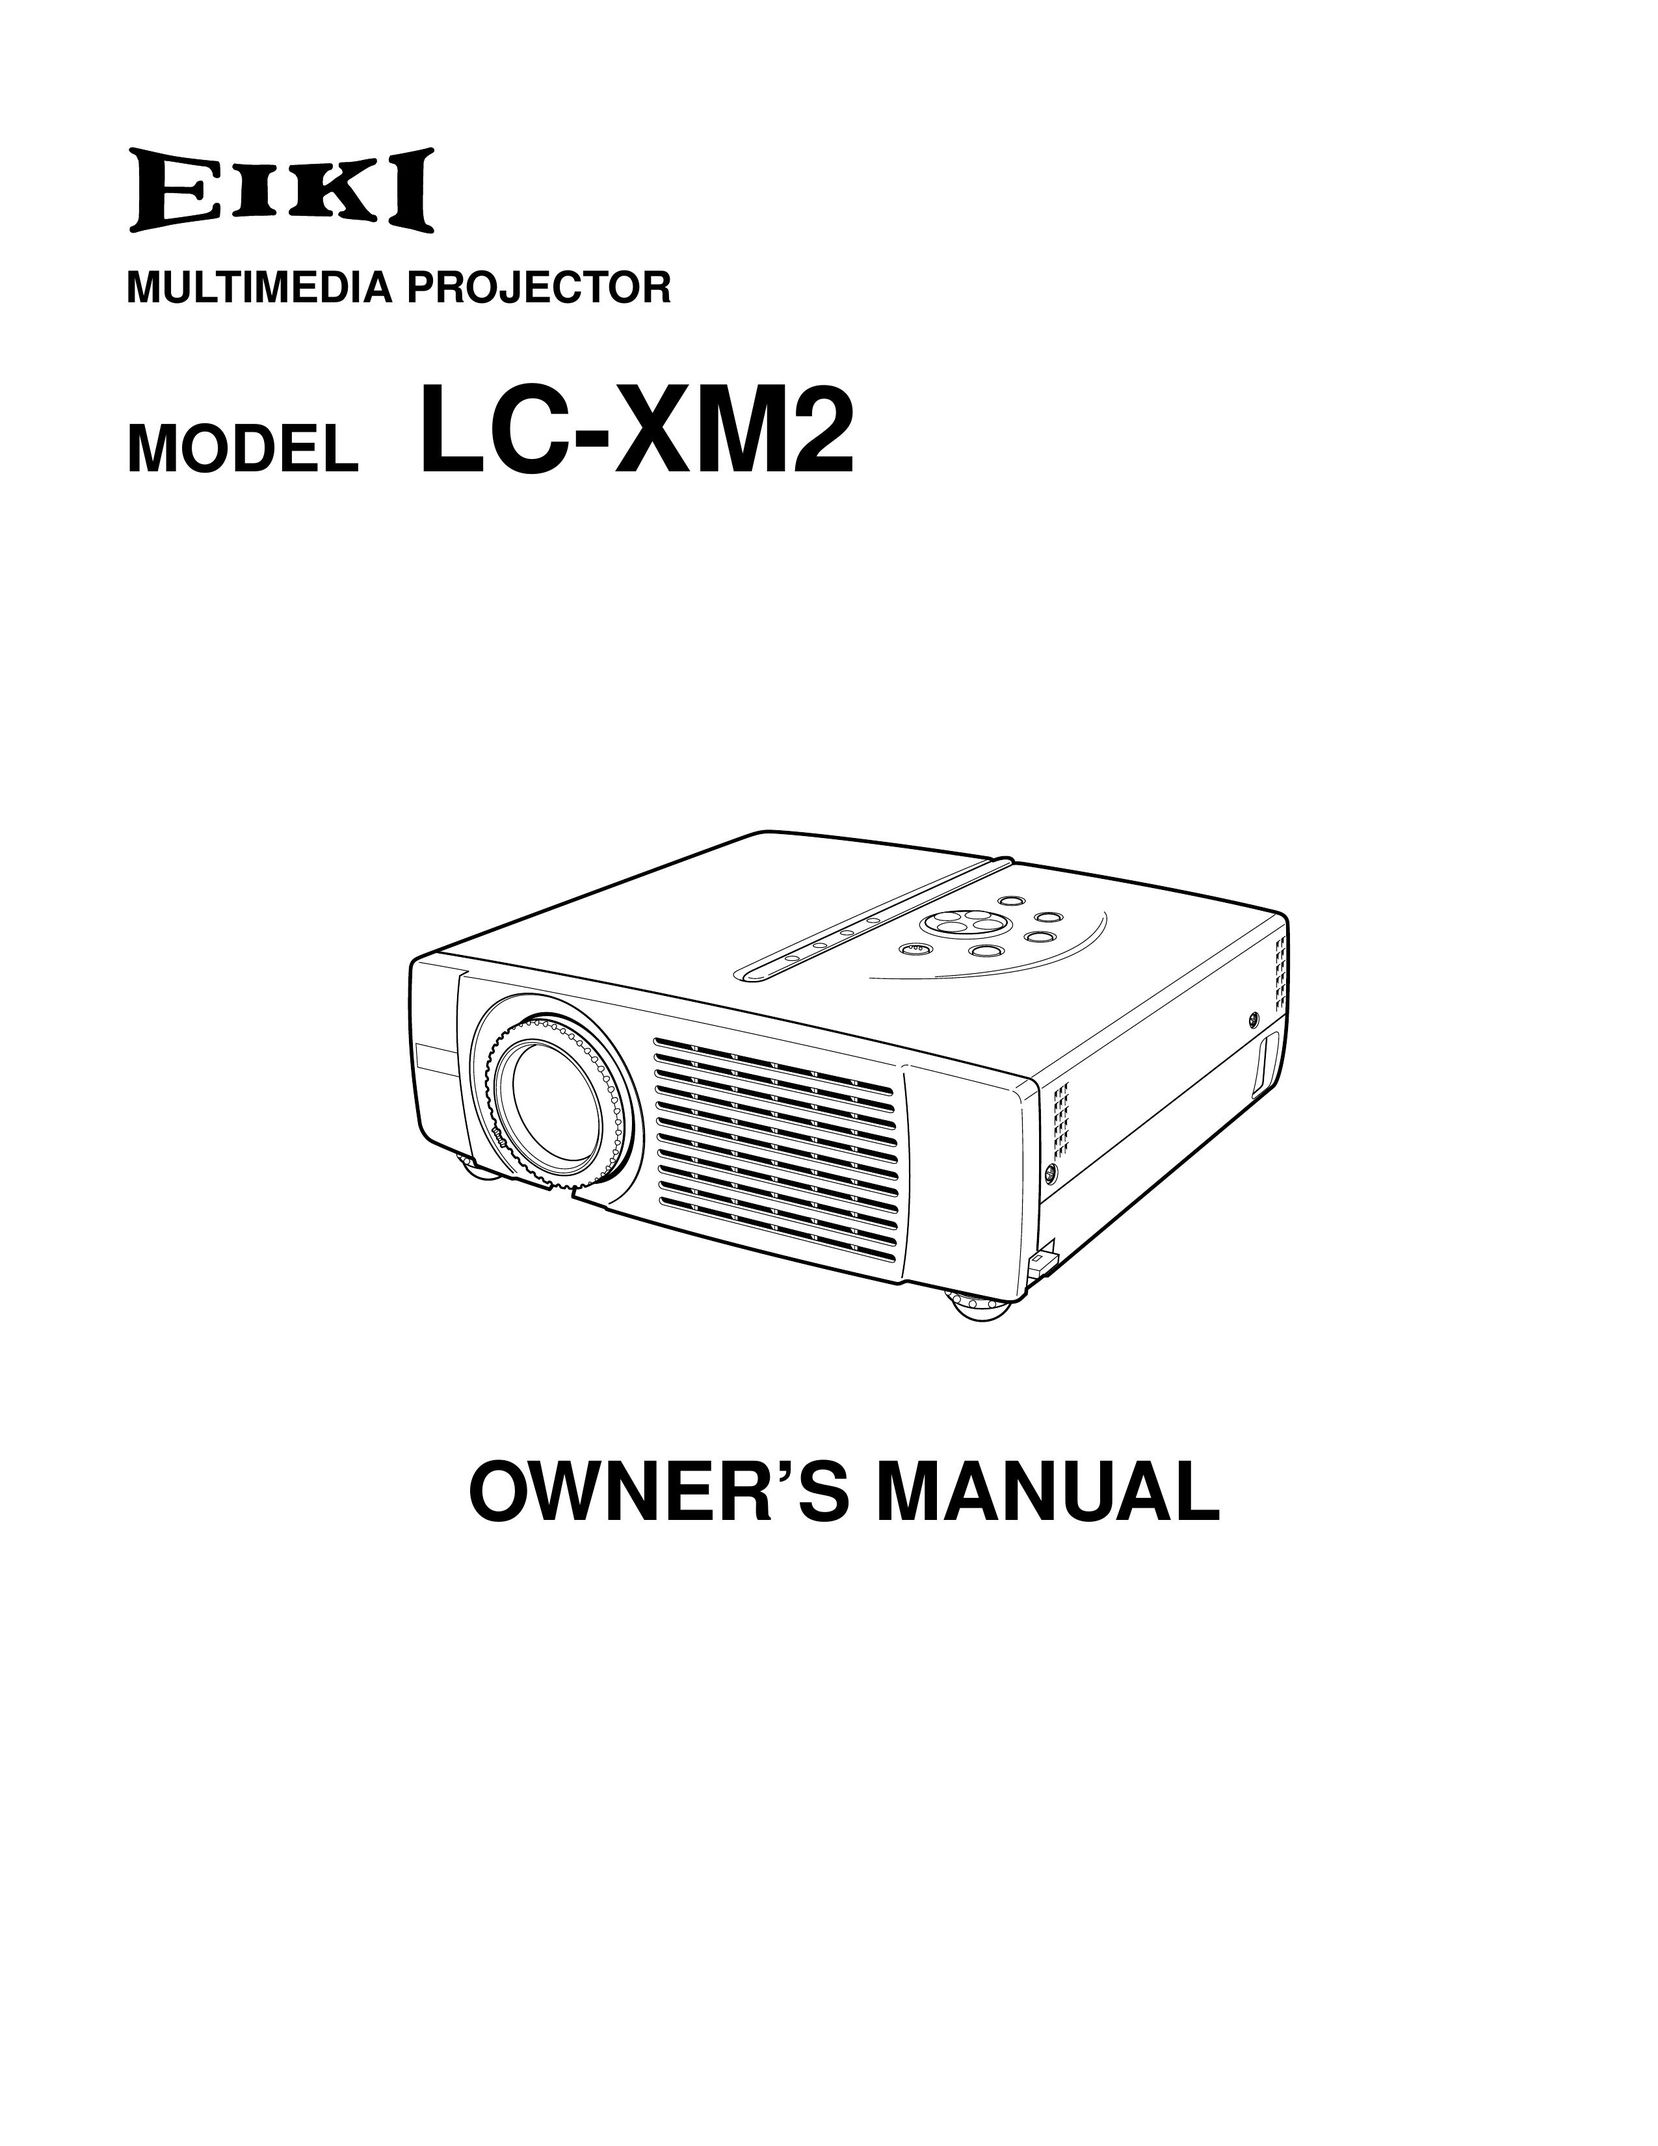 Eiki LC-XM2 CRT Television User Manual